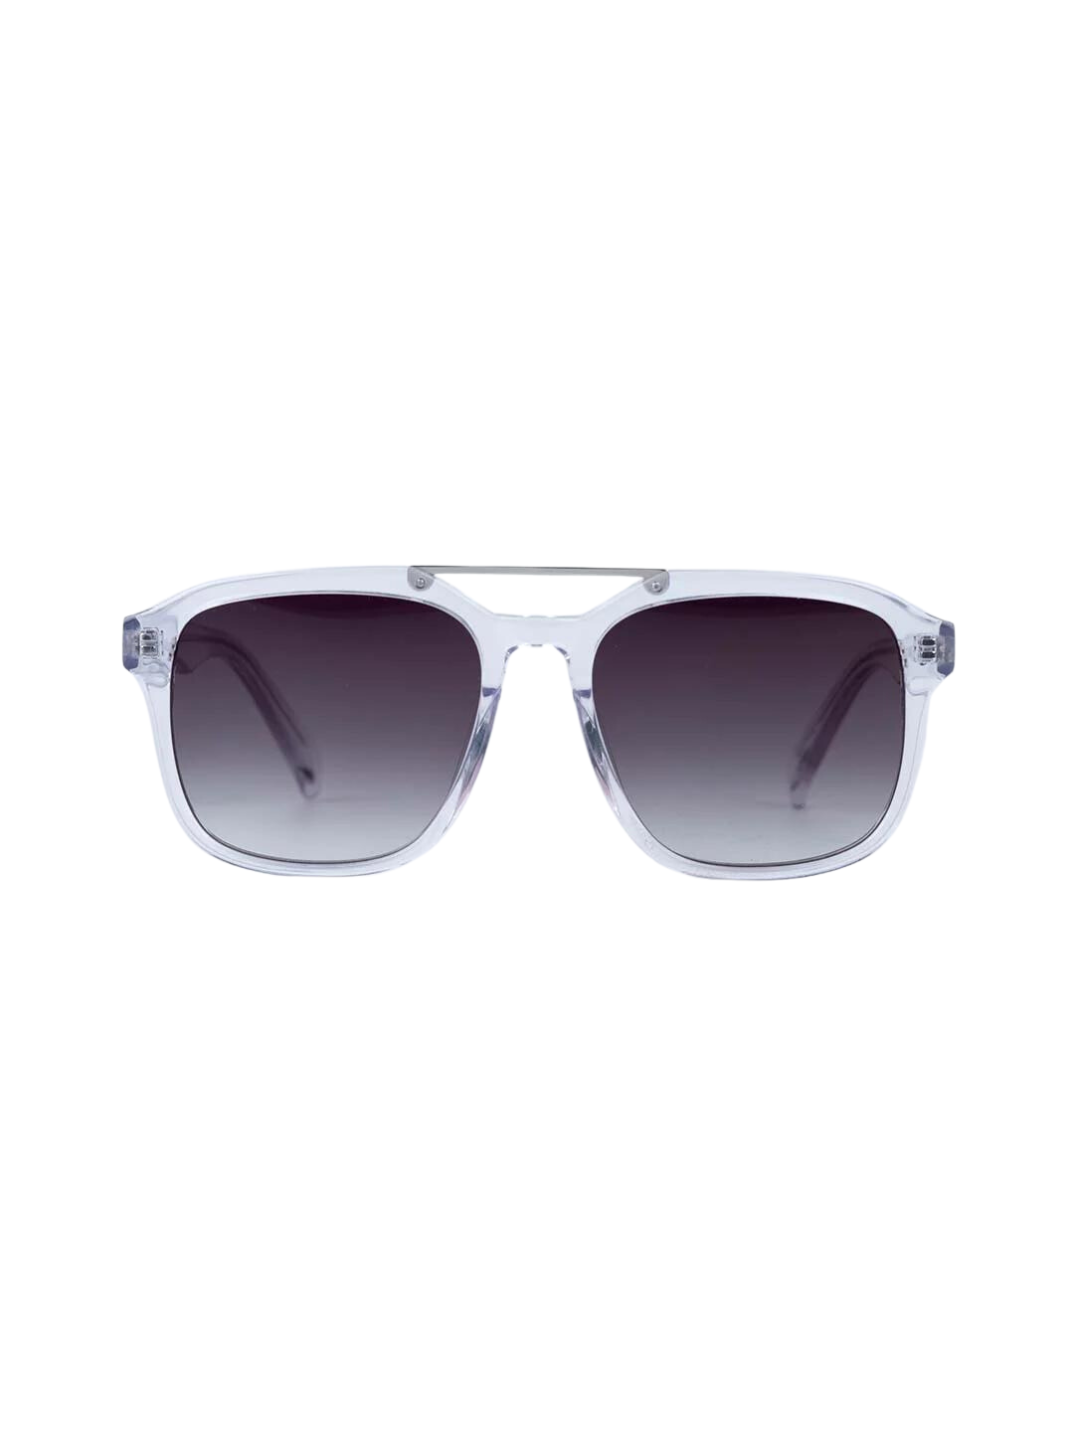 clear aviator sunglasses biodegradable eco-friendly frames